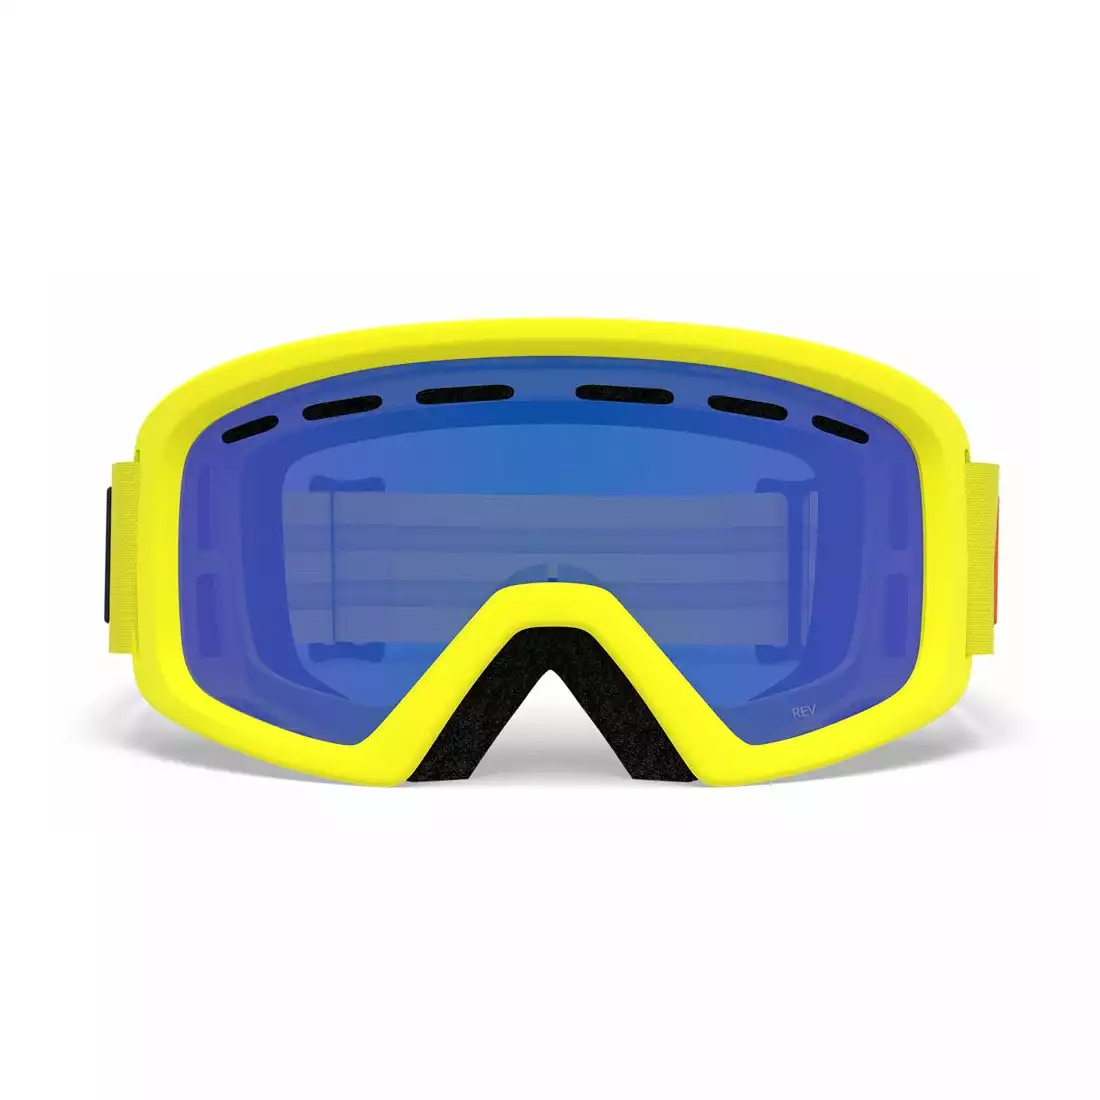 Juniorskie gogle narciarskie / snowboardowe REV NAMUK YELLOW GR-7105433